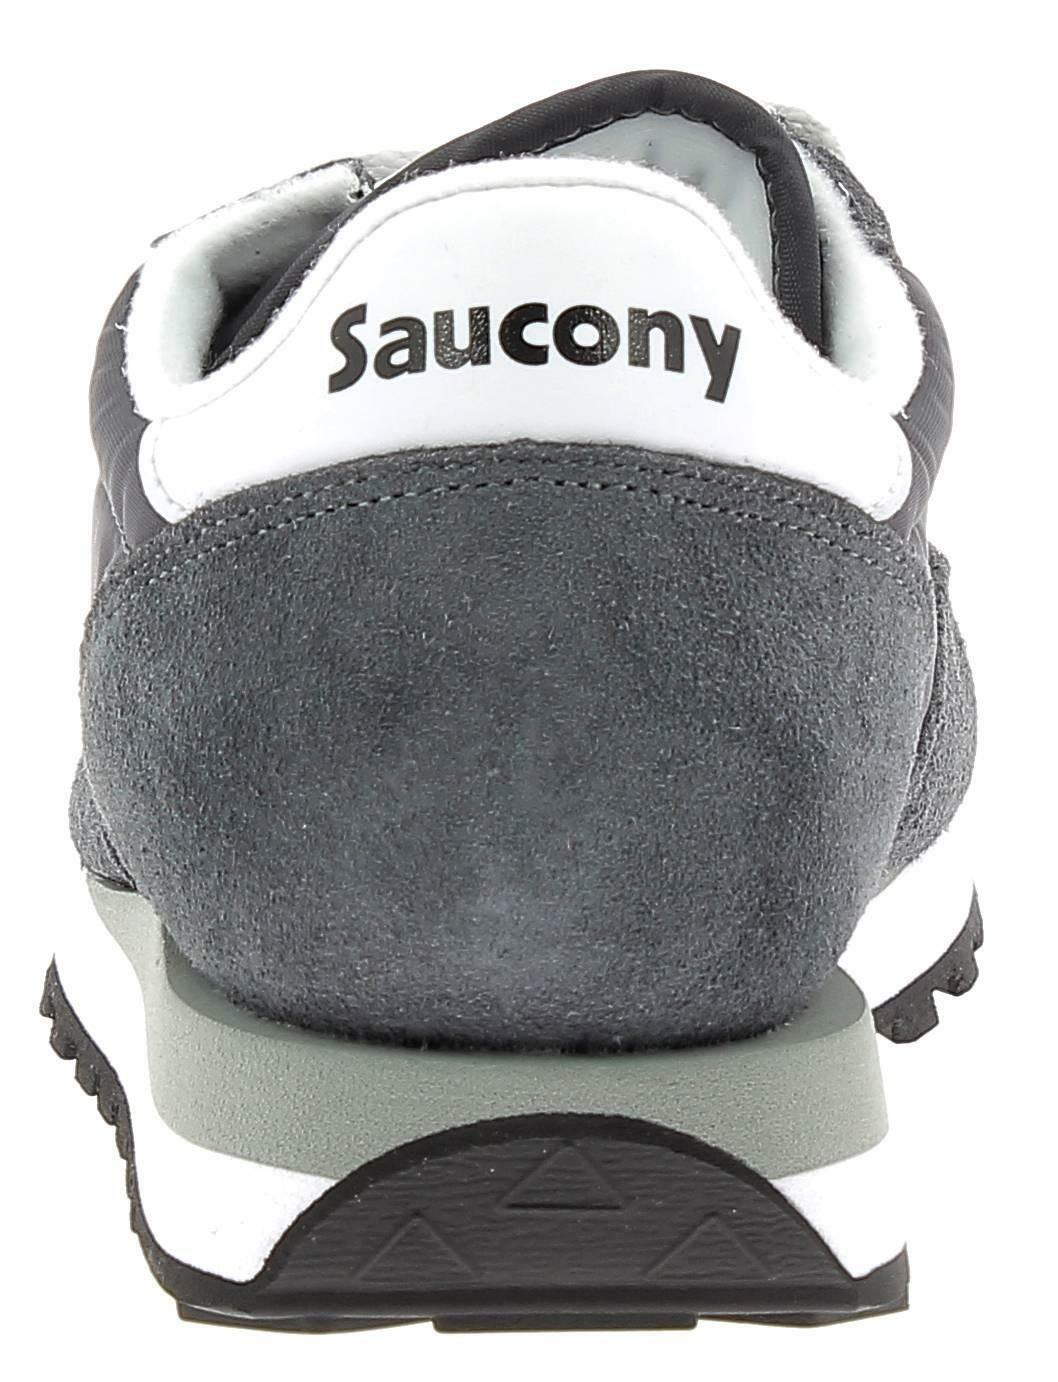 saucony saucony jazz original scarpe uomo grigie bianche